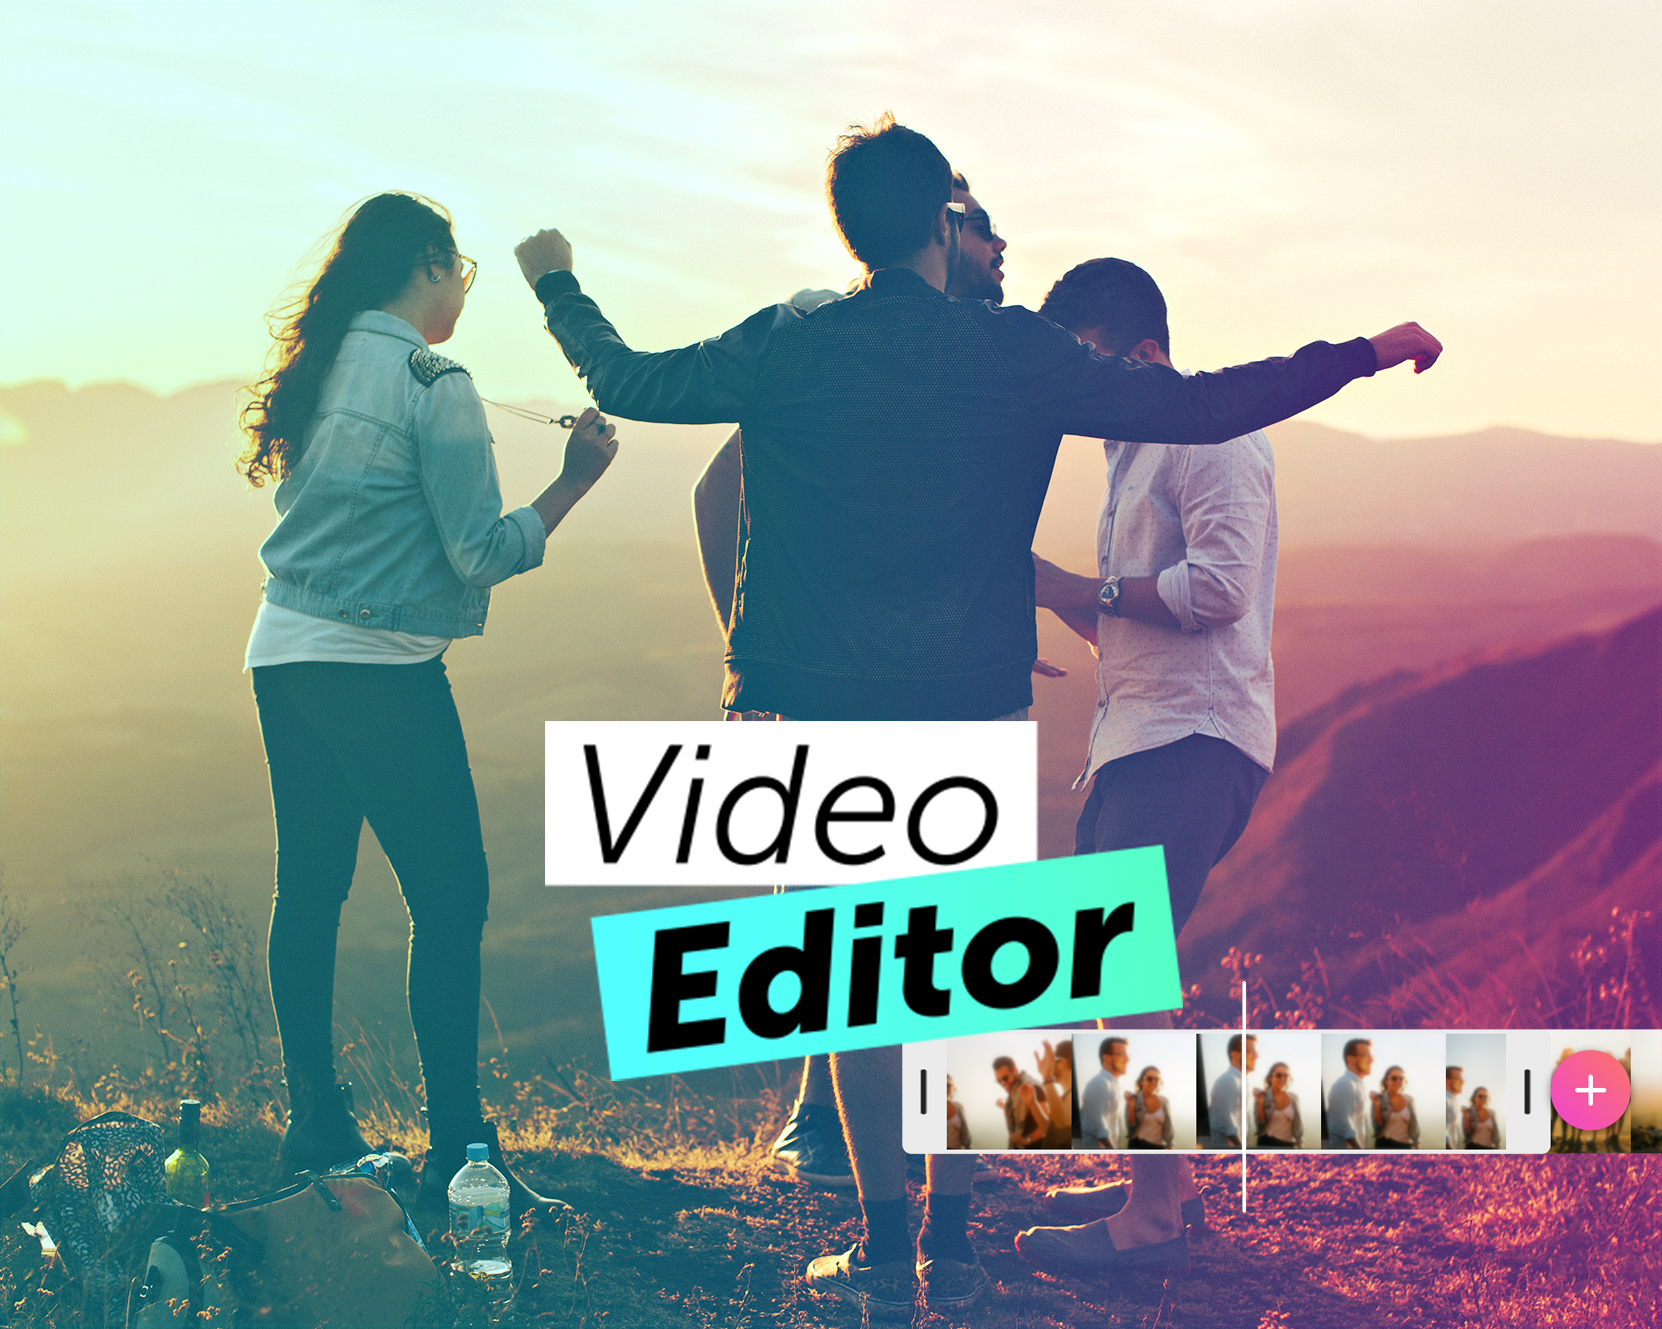 picsart-video editor-timeline